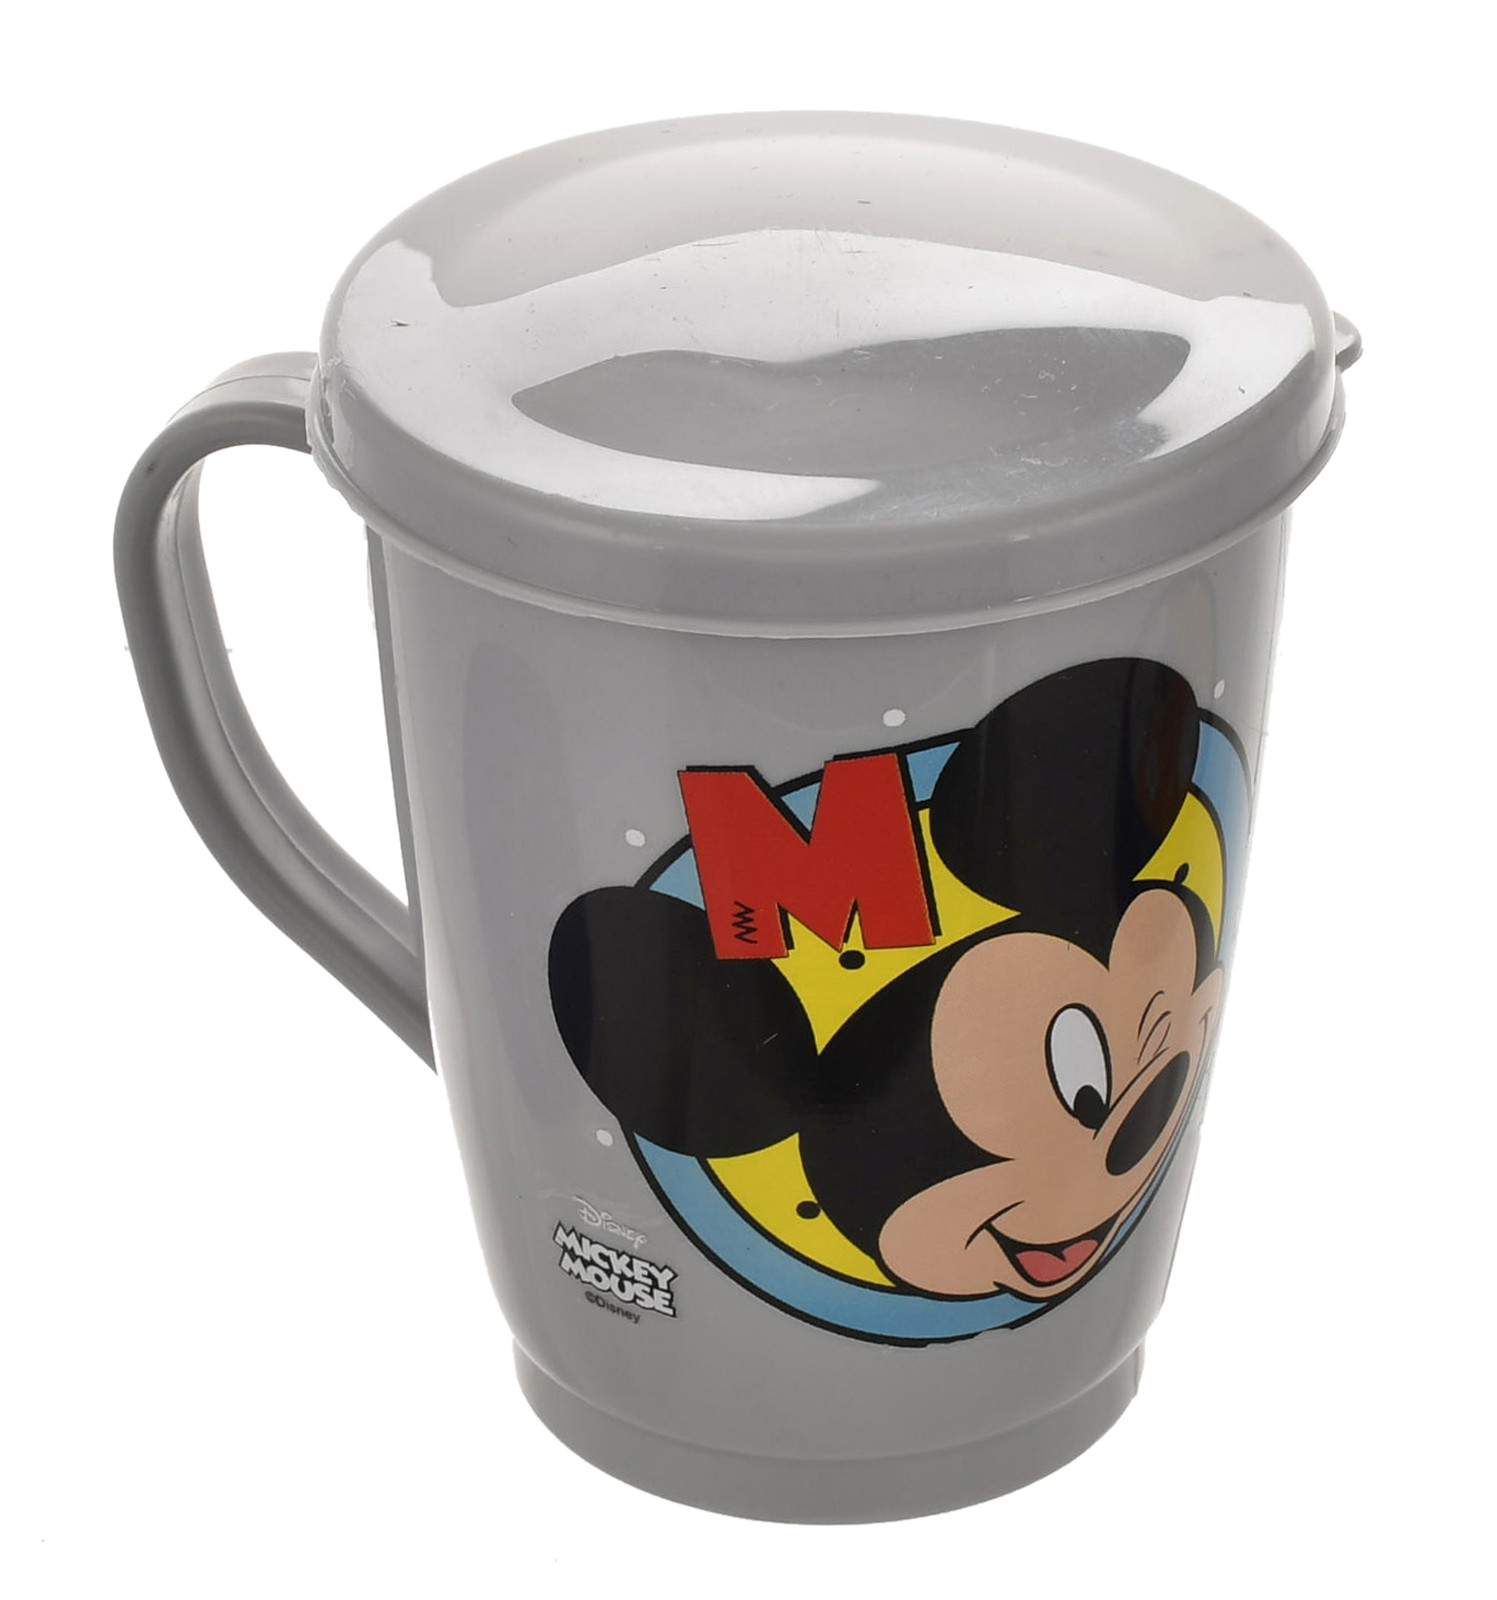 Kuber Industries Disney Printed Food Grade BPA Free Tea/Coffee Mug for Coffee Tea Cocoa, Camping Mugs with Lid, Pack of 2 (Light Grey & Grey)